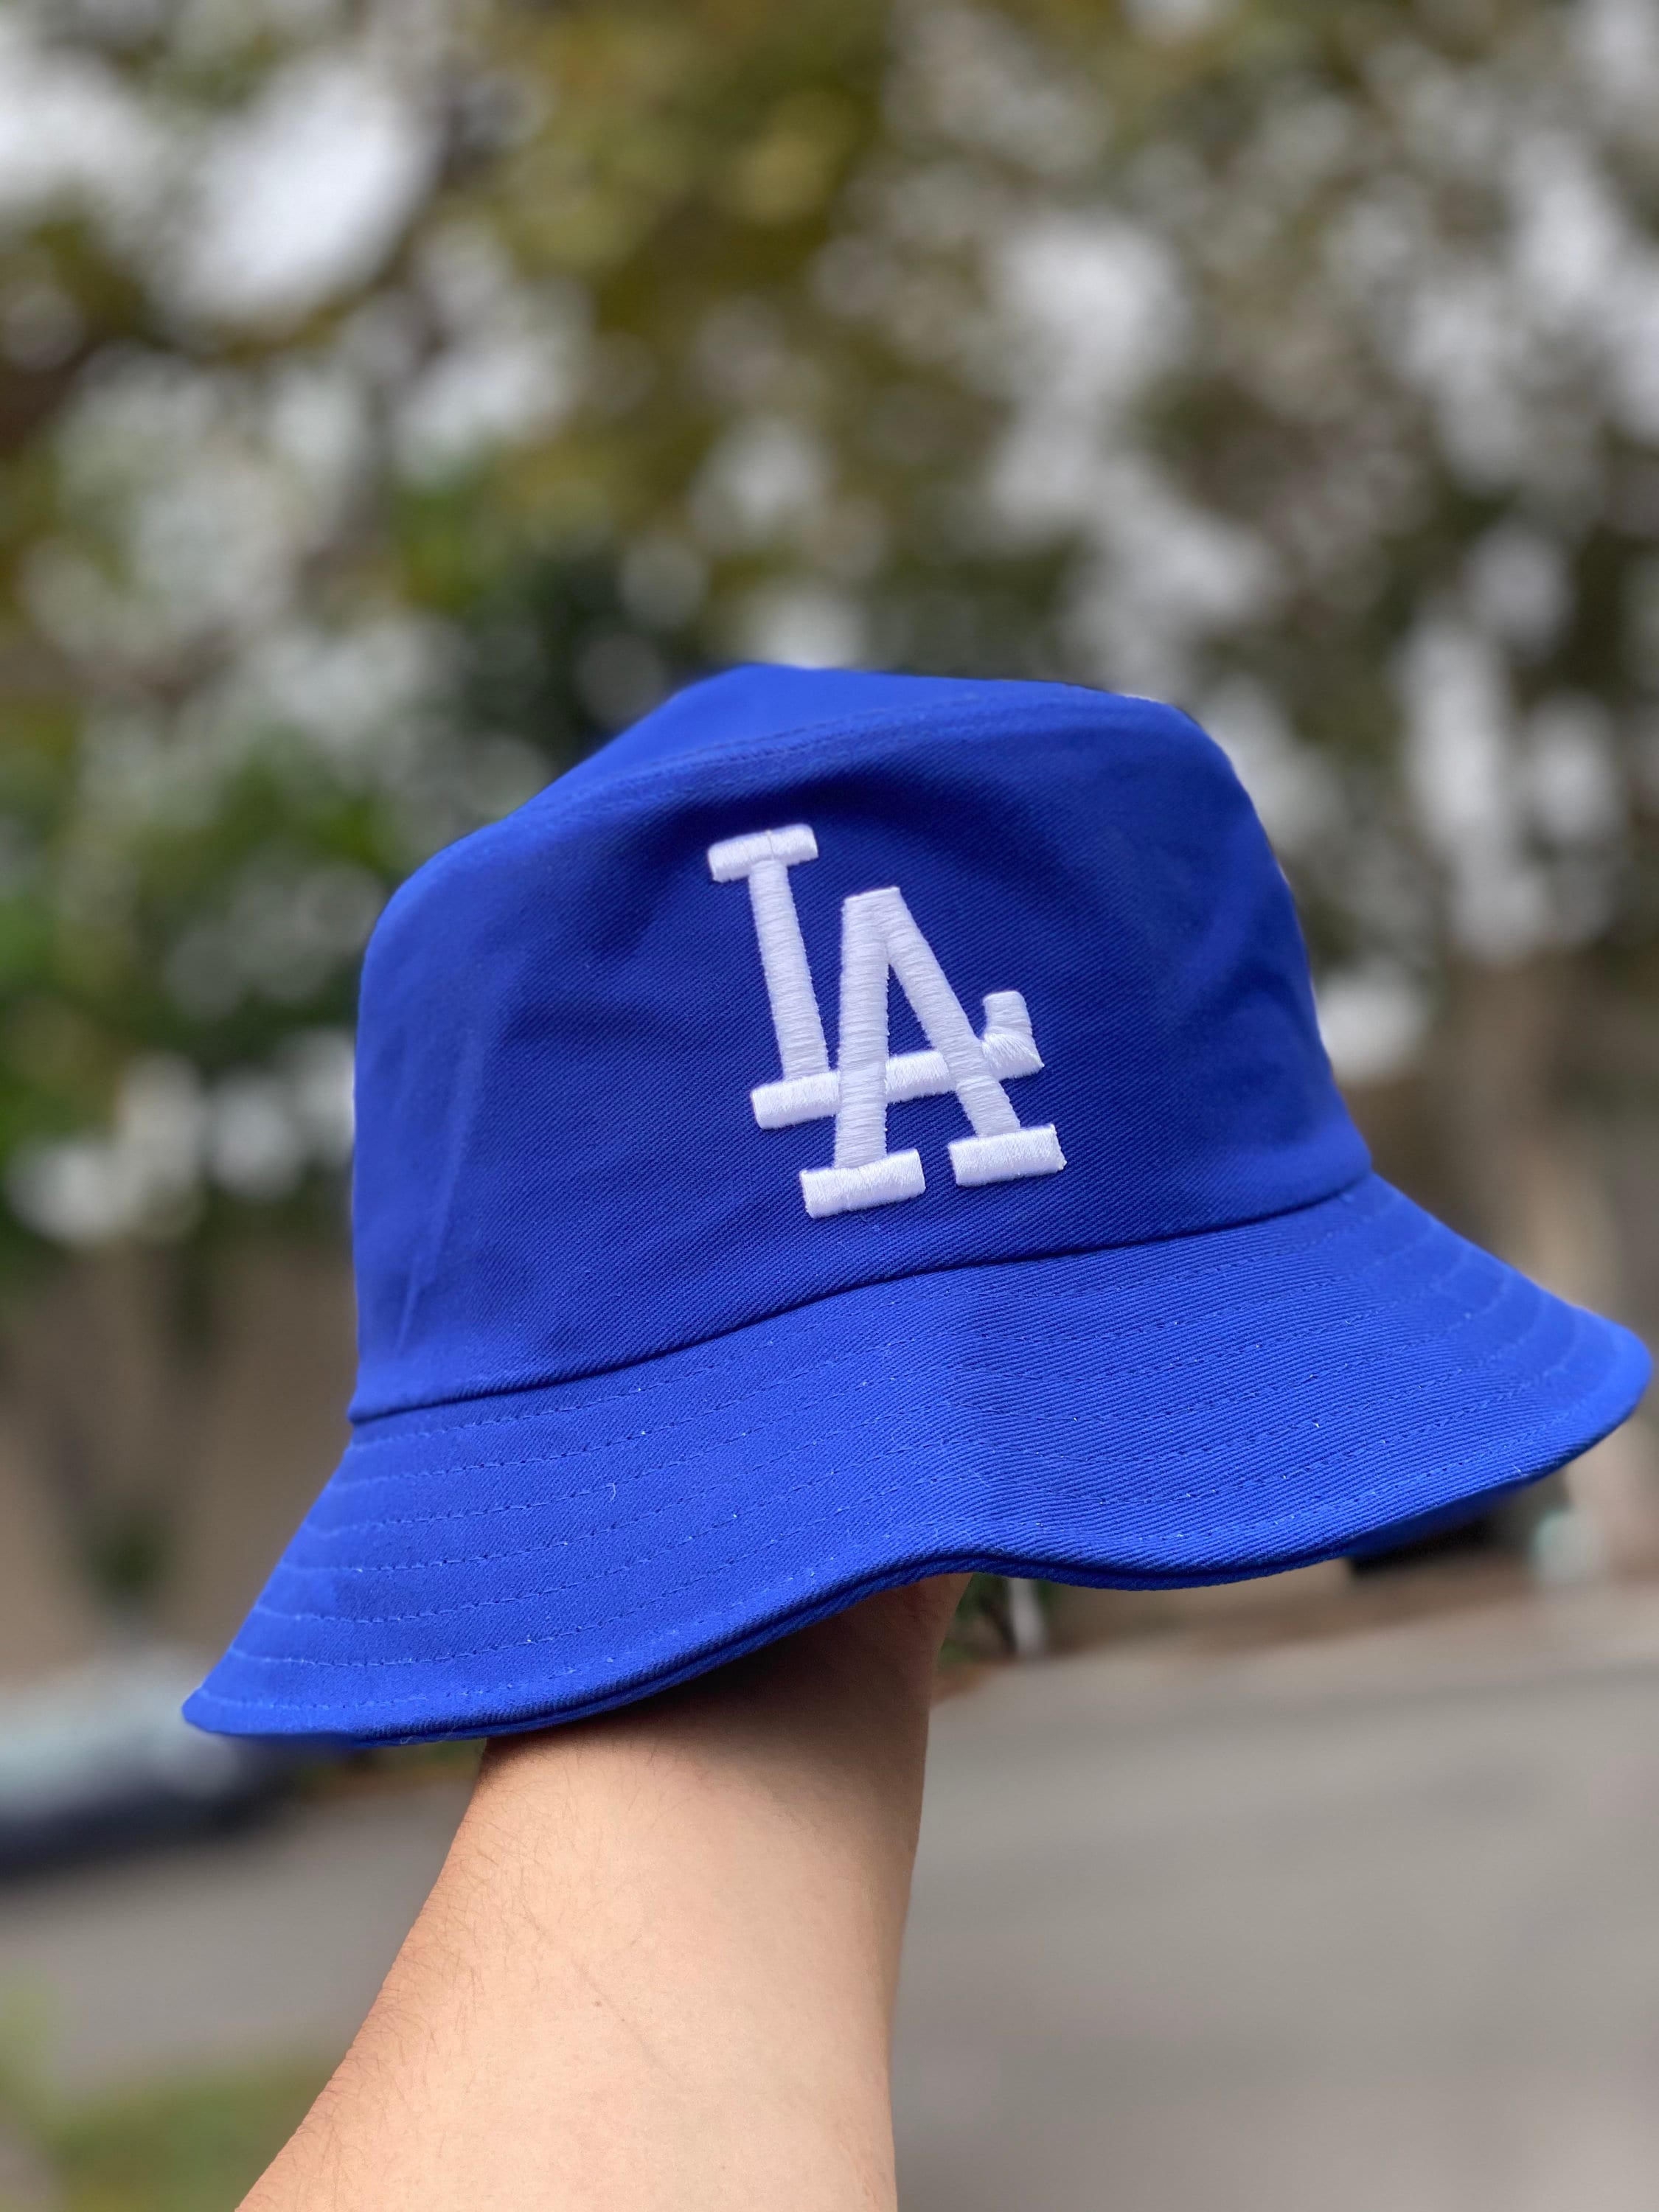 La Dodgers Baseball Hats 